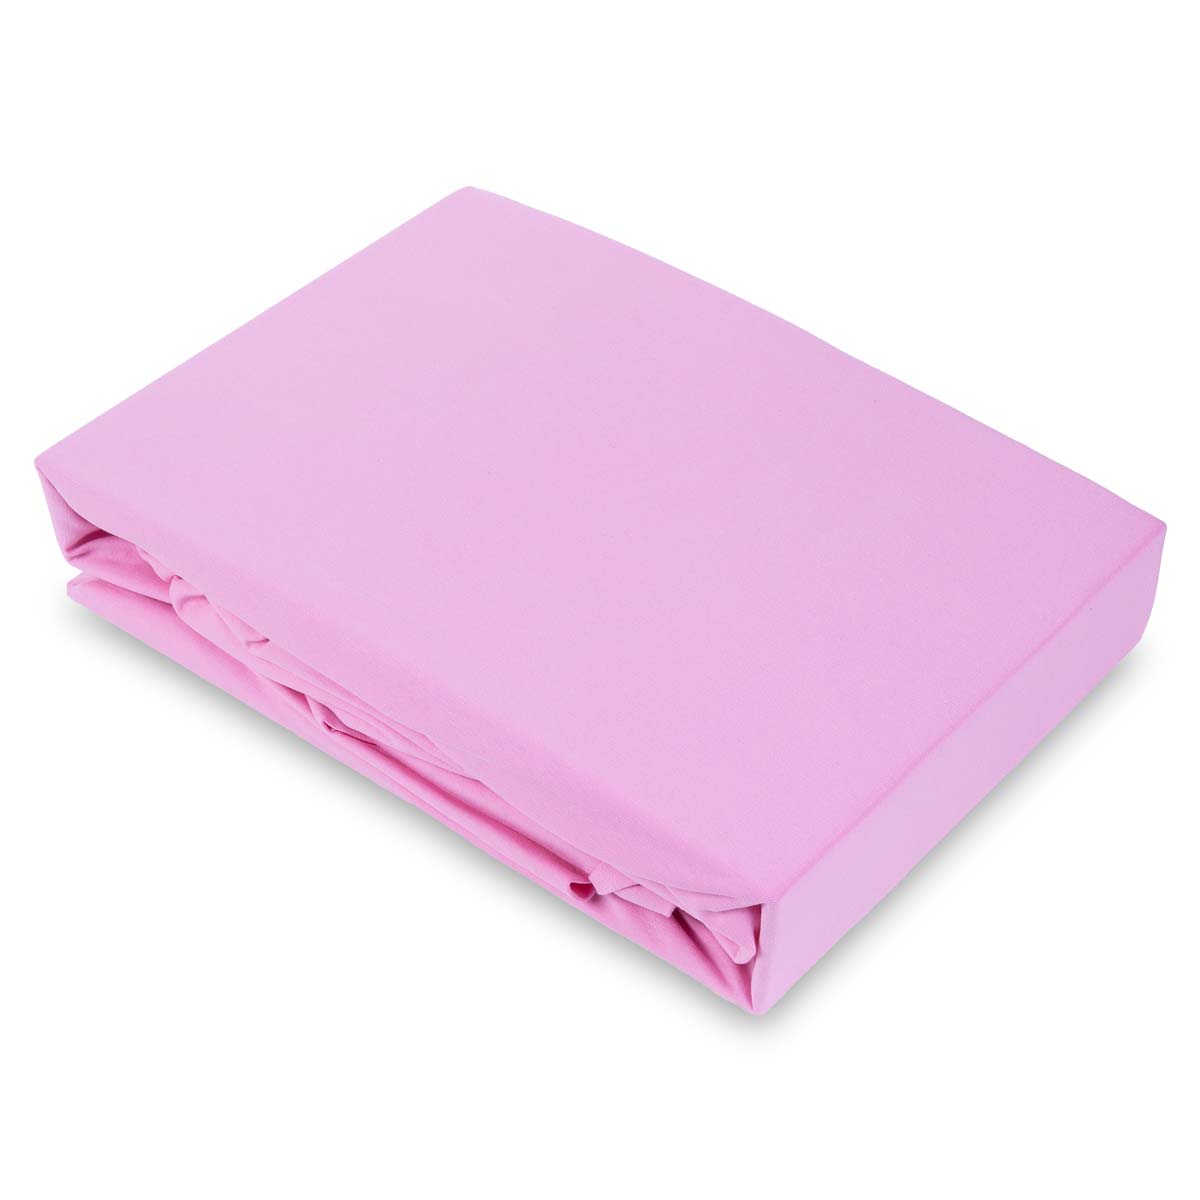 Простыня натяжная 1,5-спальная Pappel 160x220см, цвет розовый Pappel 160220-35/Pink 11